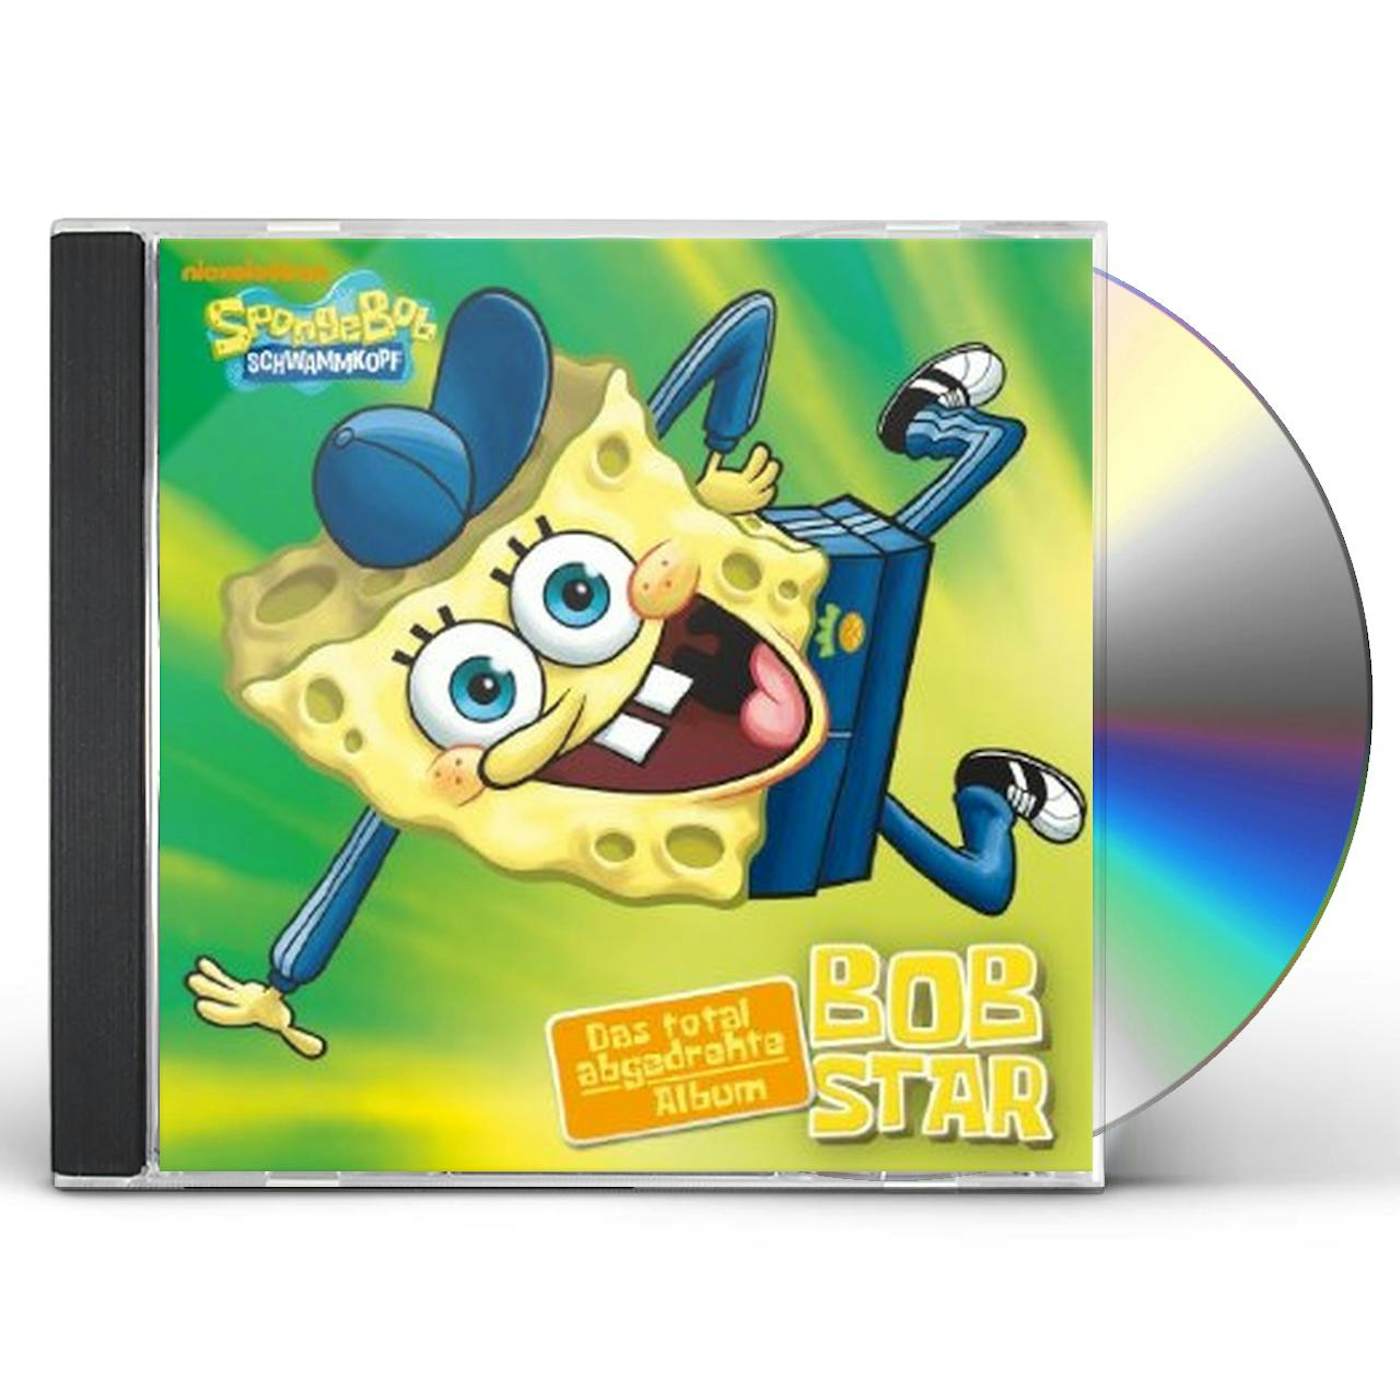 SpongeBob on DVD Volume 1, Club SpongeBob Wiki